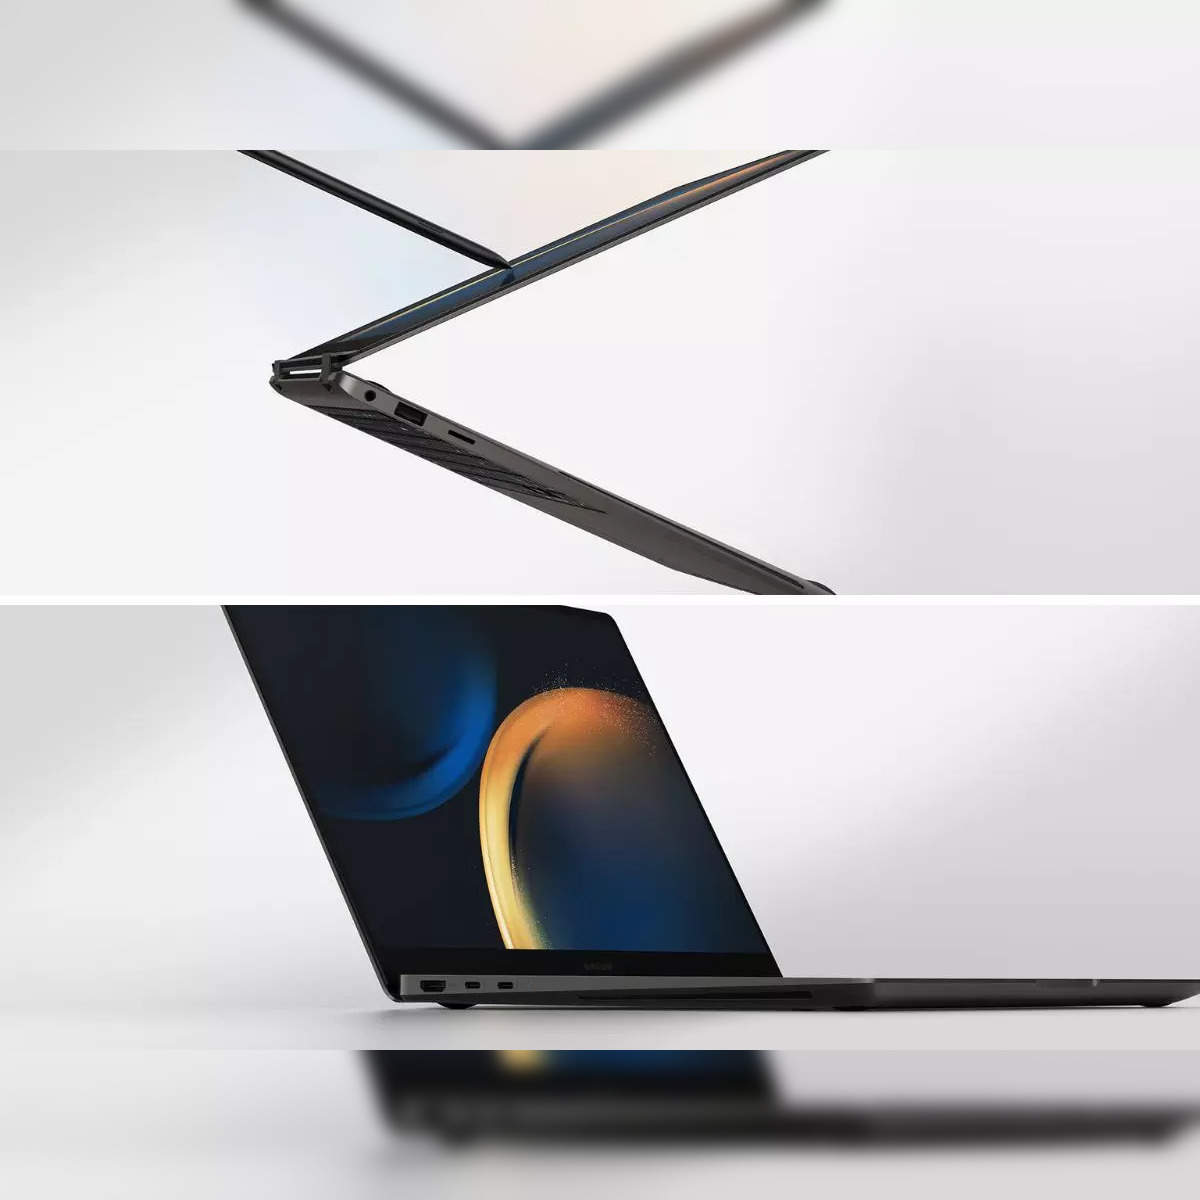 Samsung's Galaxy Book 3 Ultra laptop includes AMOLED screen tech